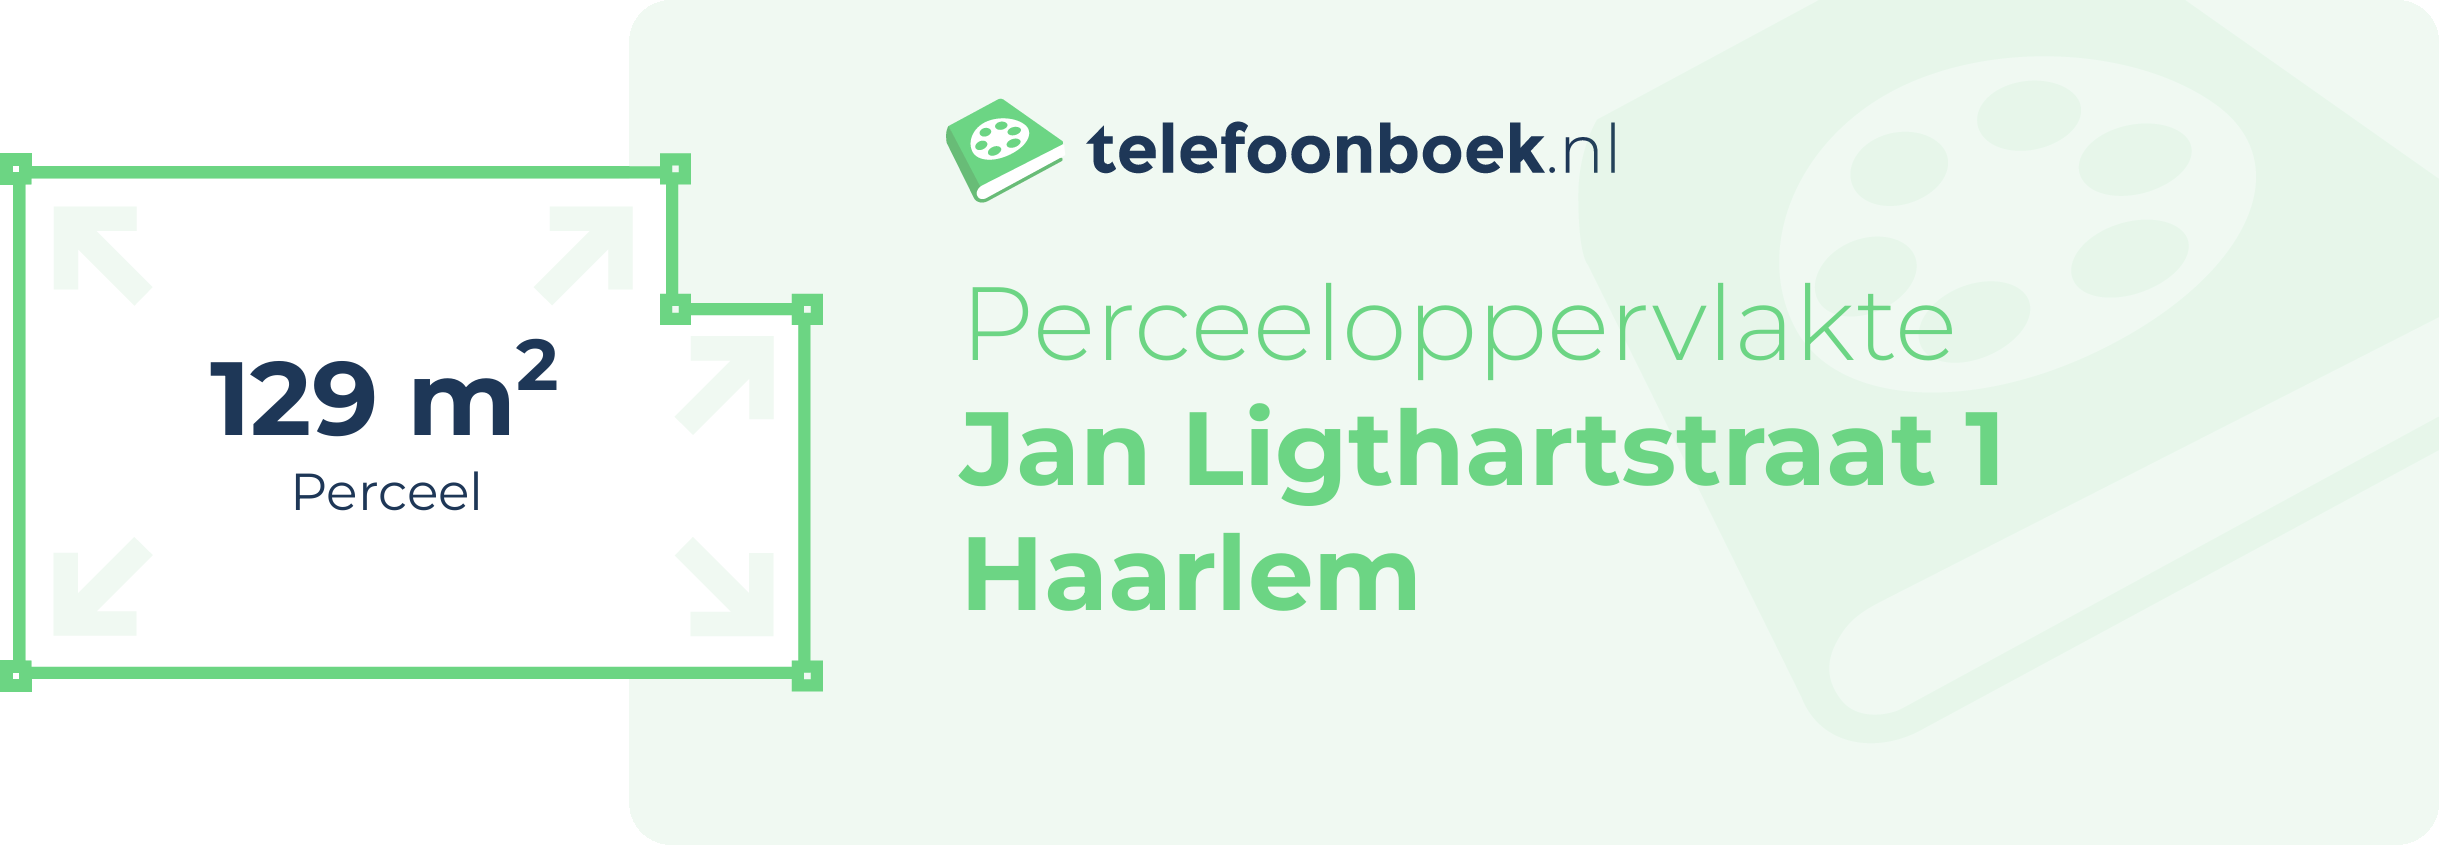 Perceeloppervlakte Jan Ligthartstraat 1 Haarlem